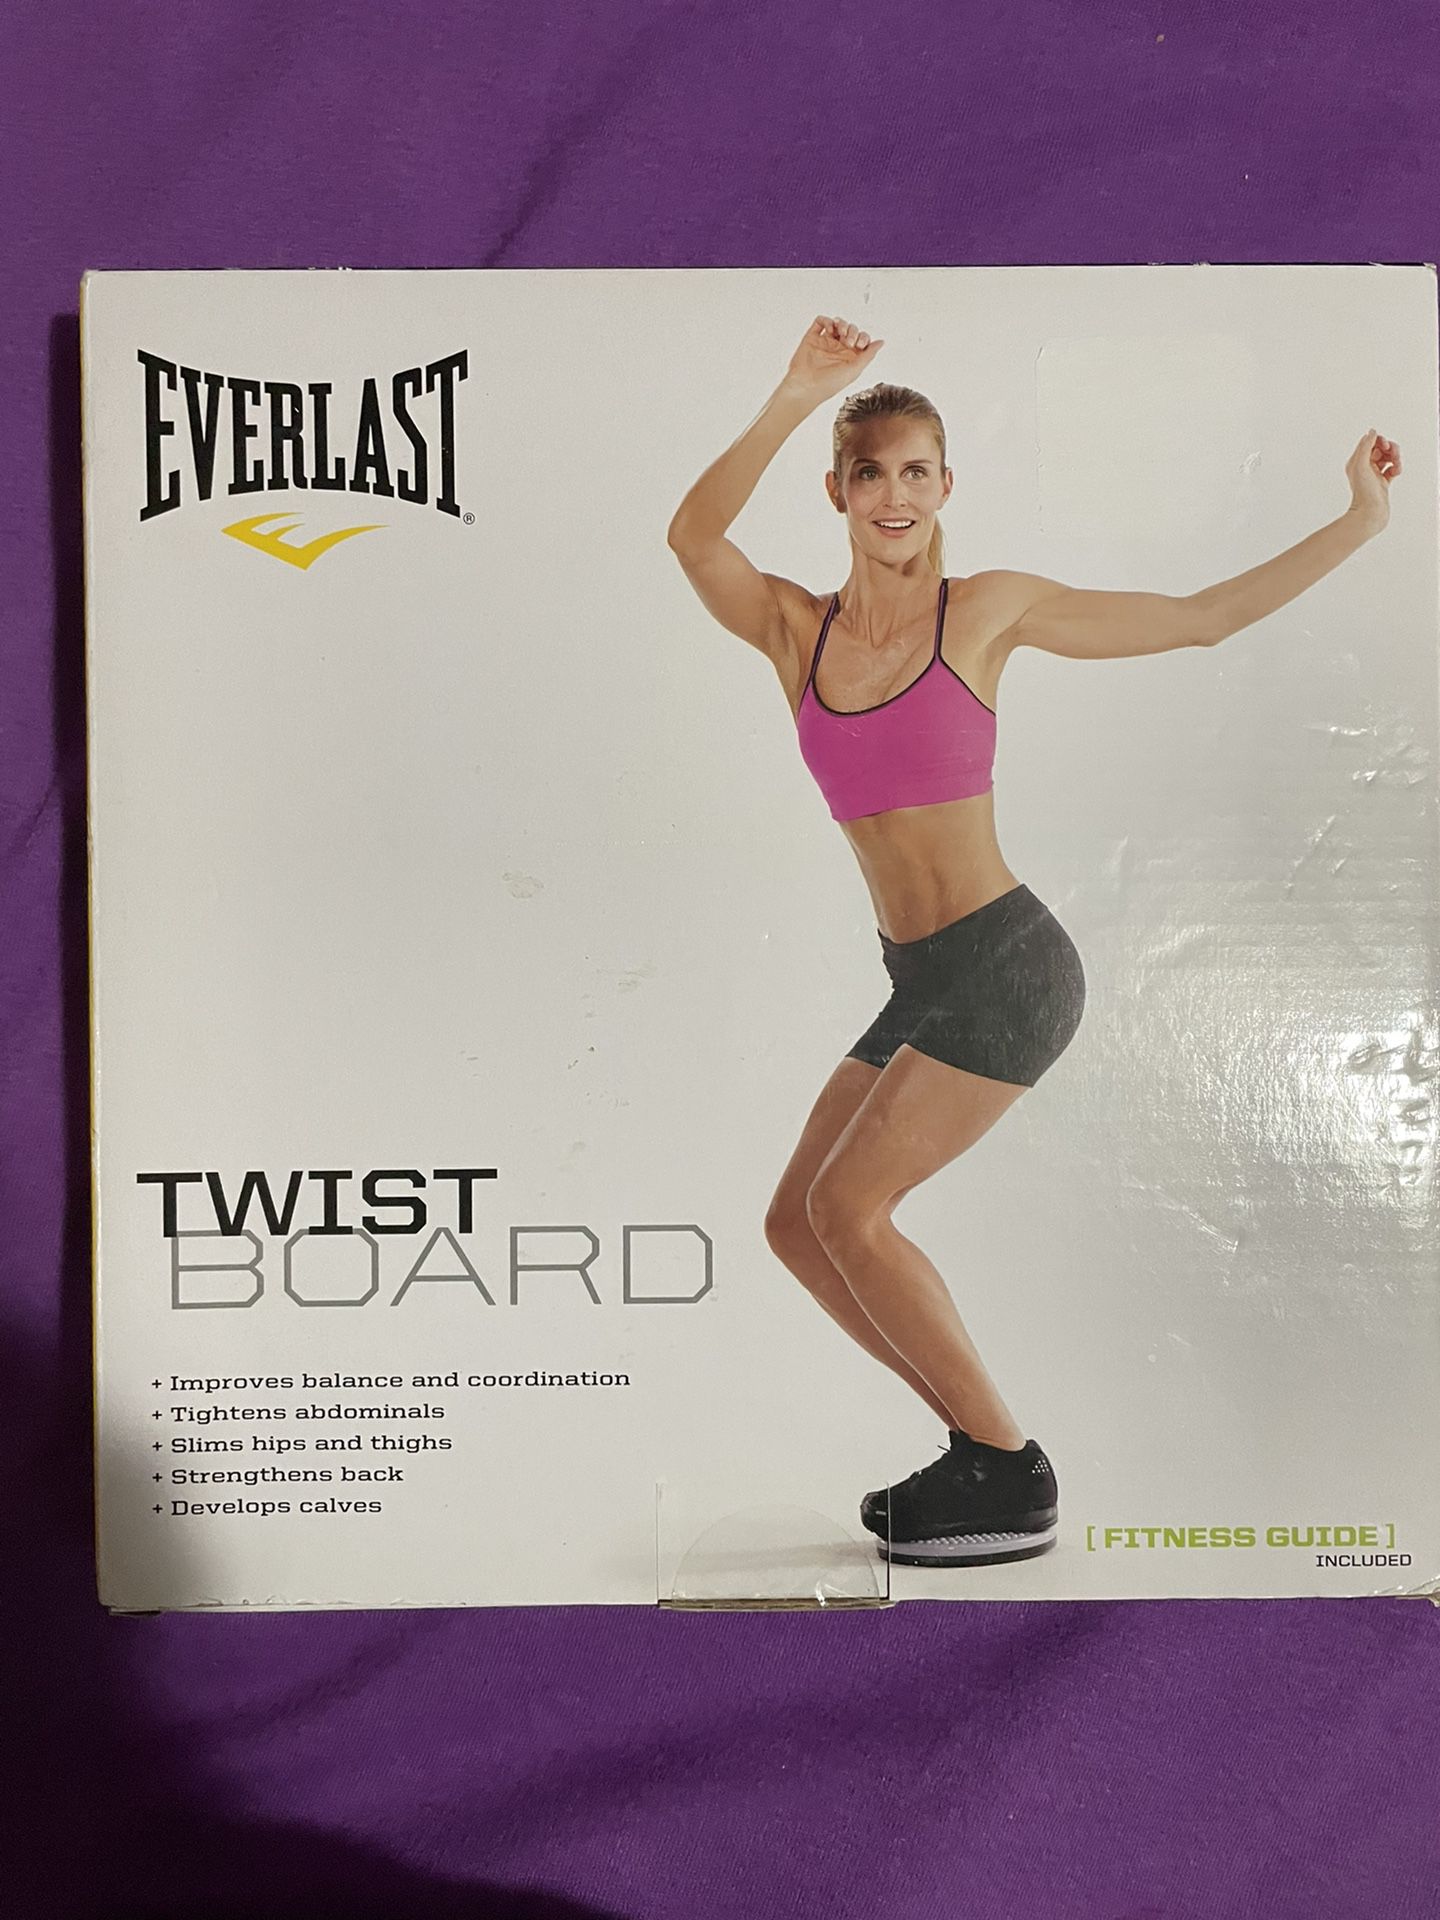 Twist Board